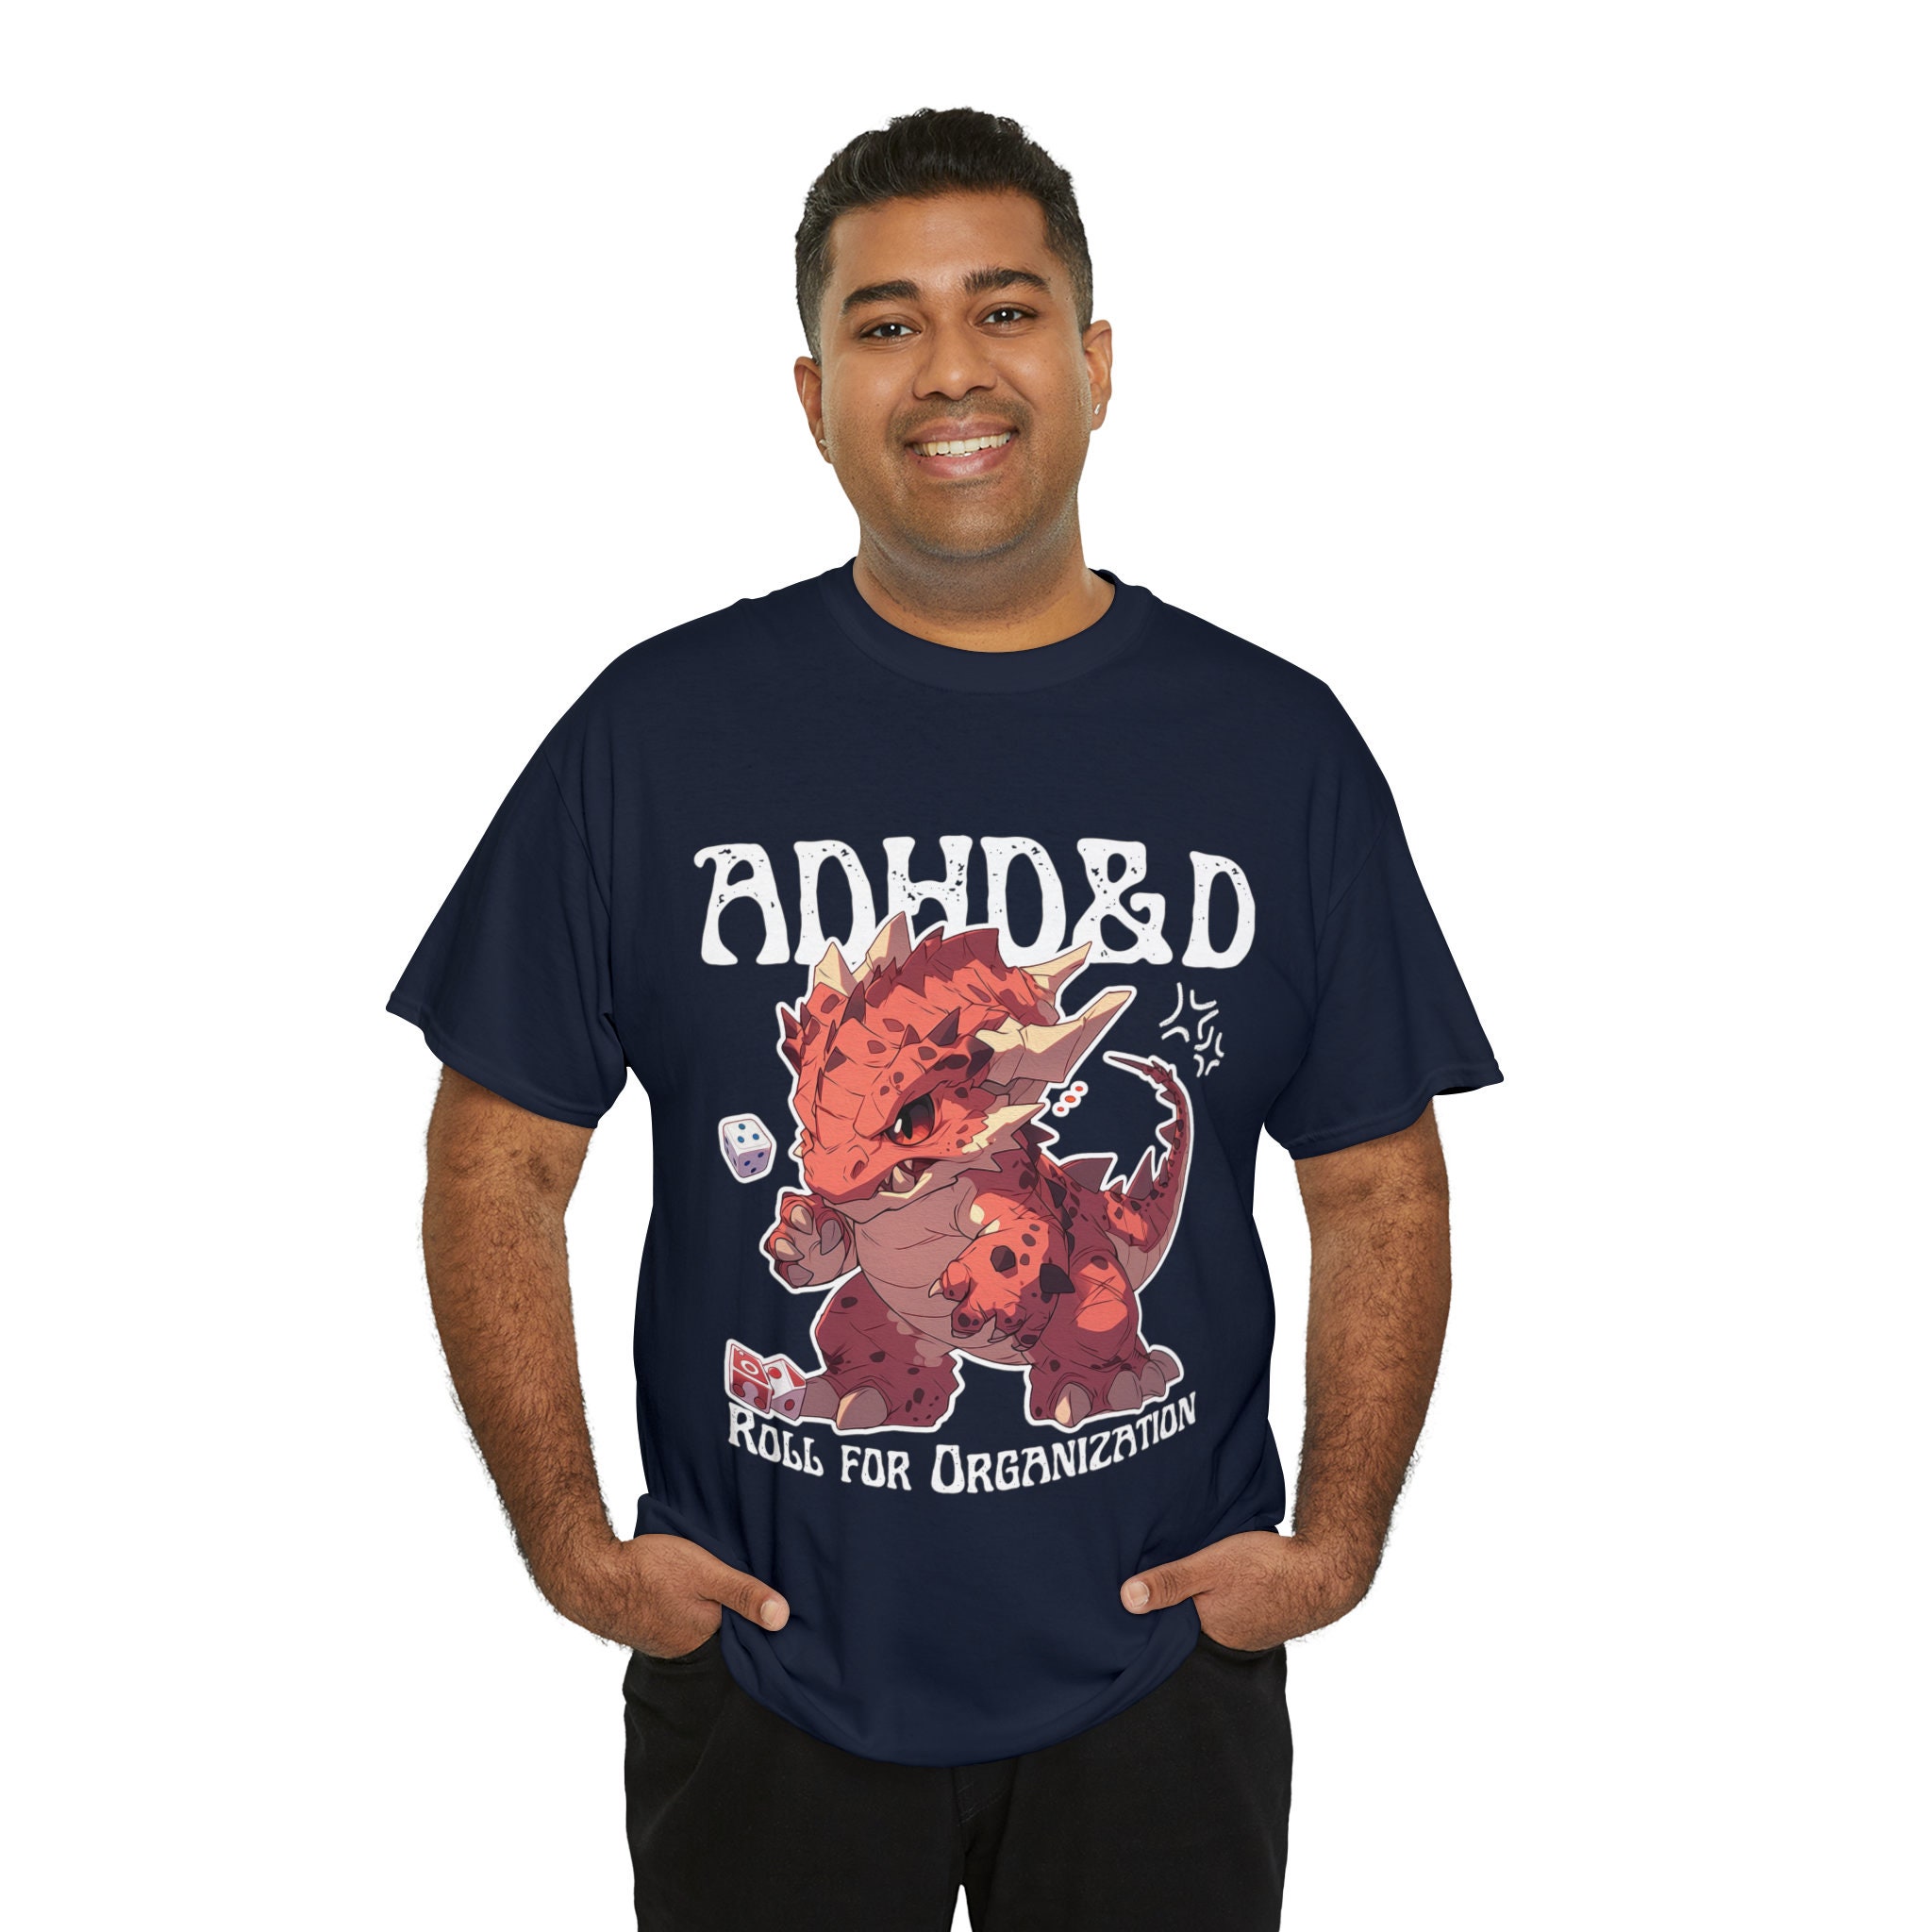 Black or Navy ADHD&D Roll for Organization T-shirt Adhdnd Shirt Gifts ...